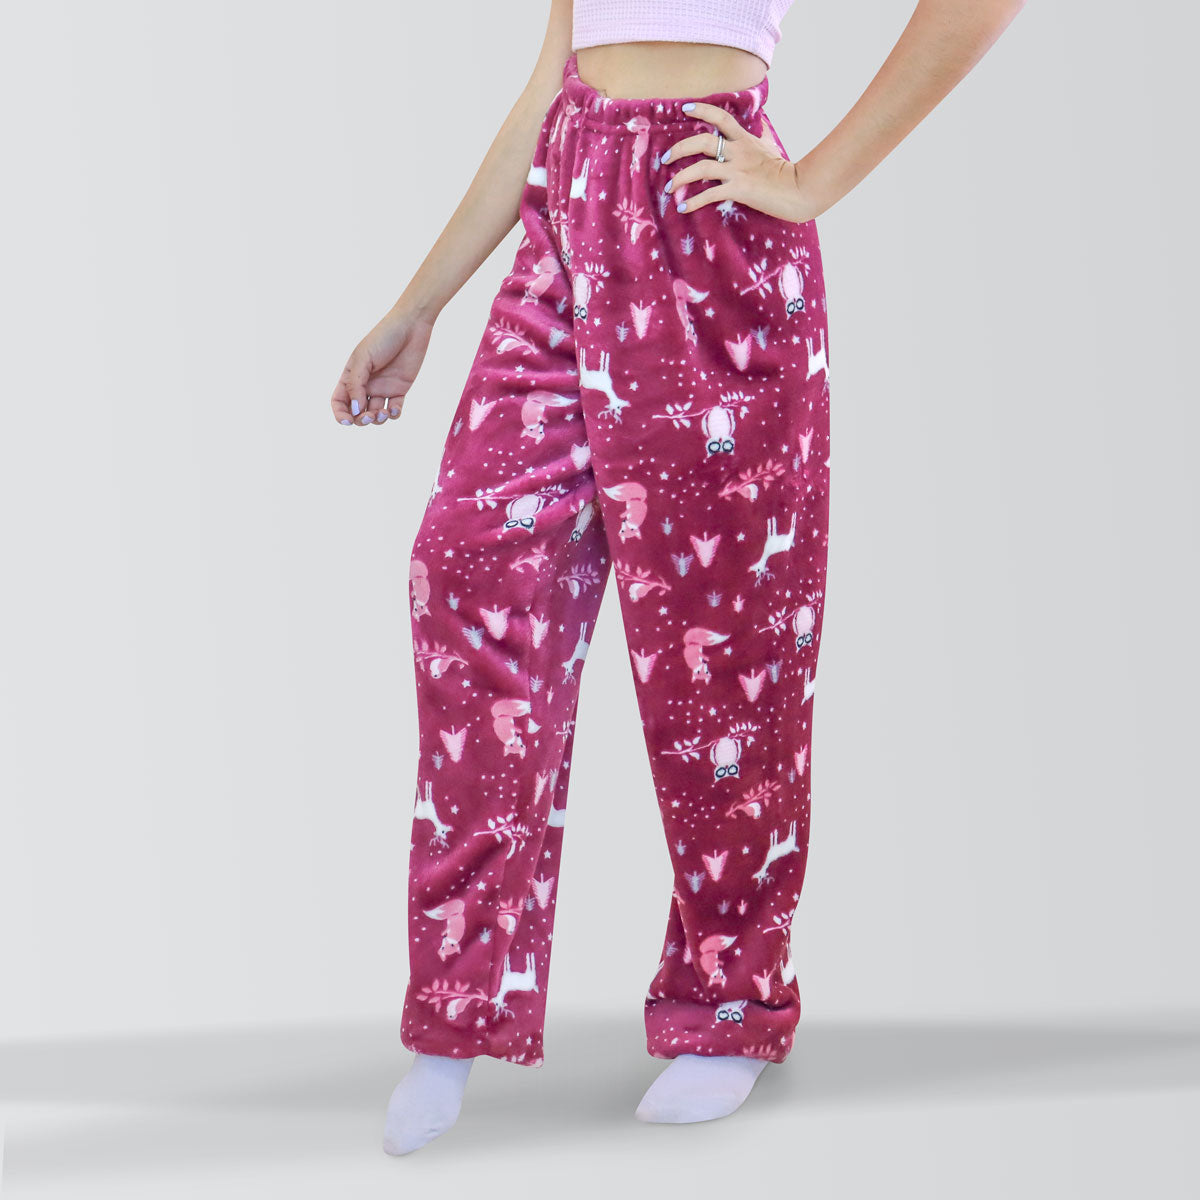 Outlet de pantalones de pijamas de mujer